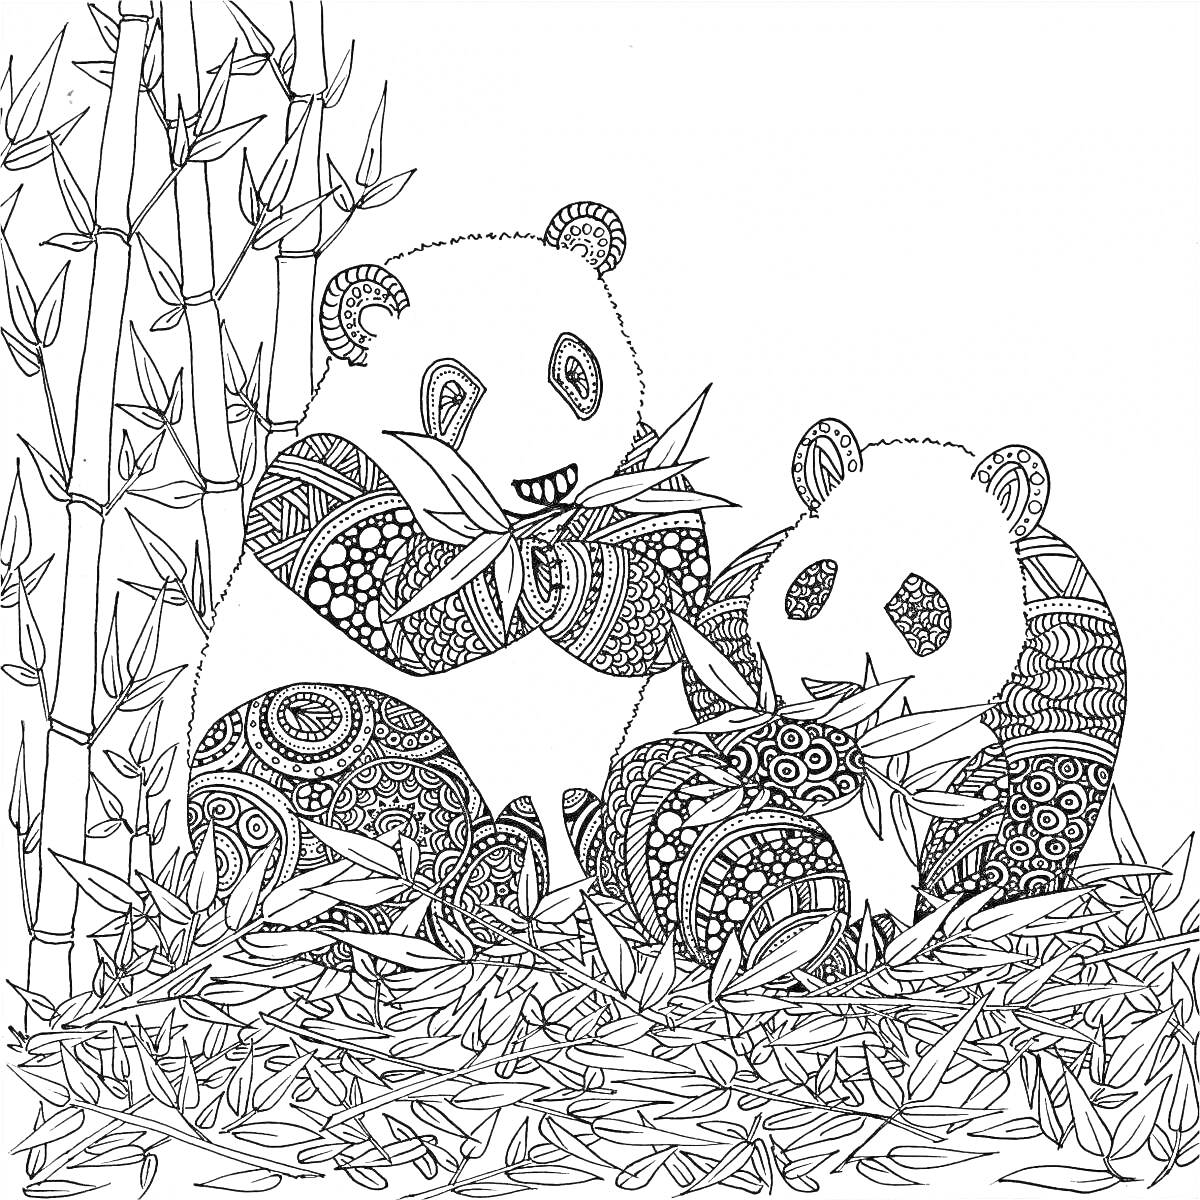 Раскраска Две панды с рисунками на теле едят бамбук среди растений